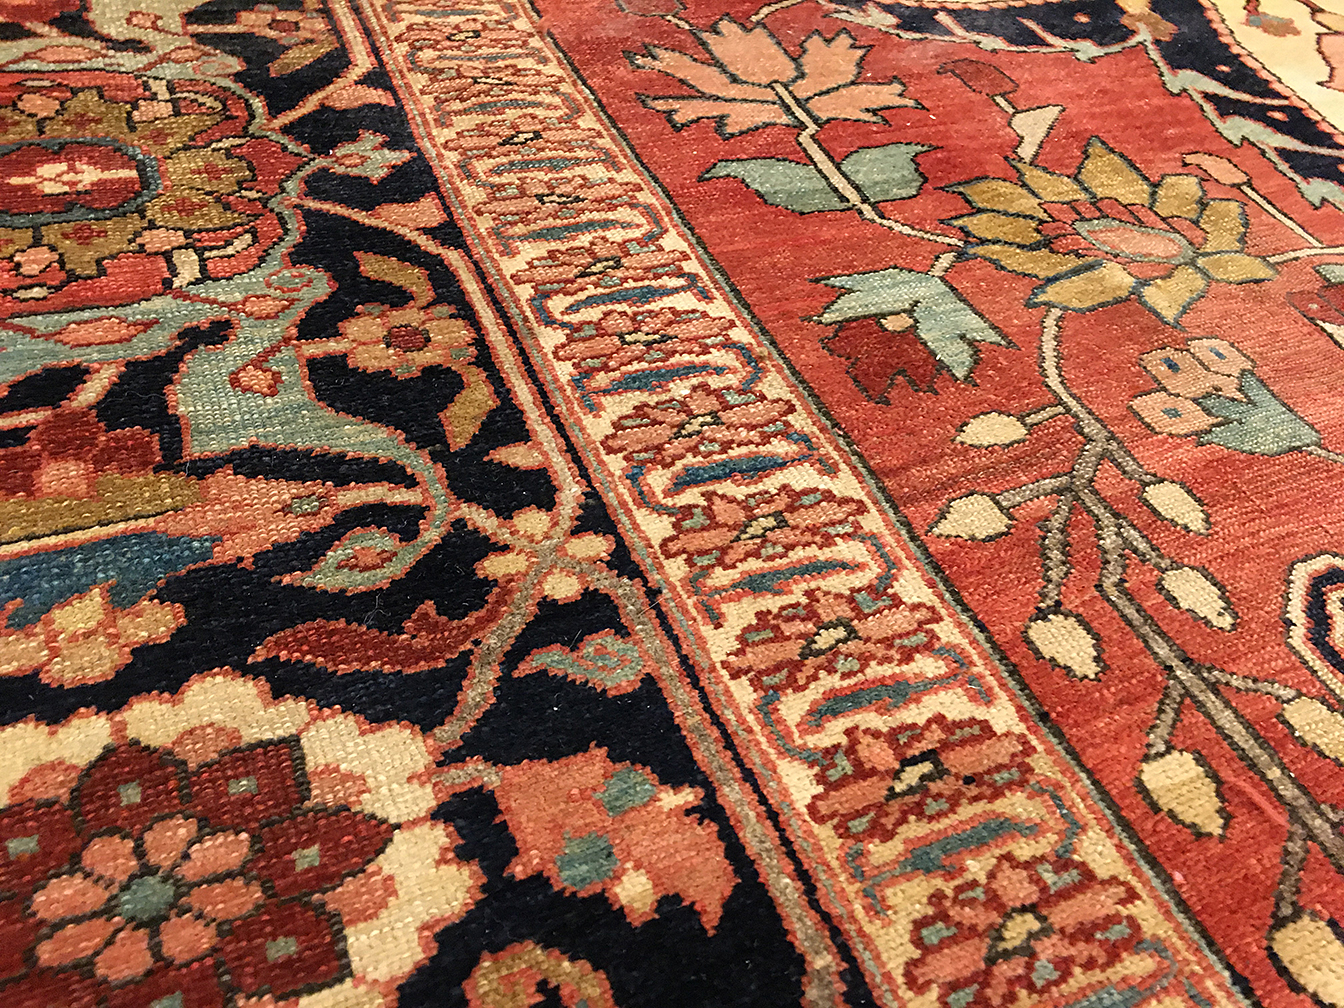 Antique tabriz Carpet - # 53180